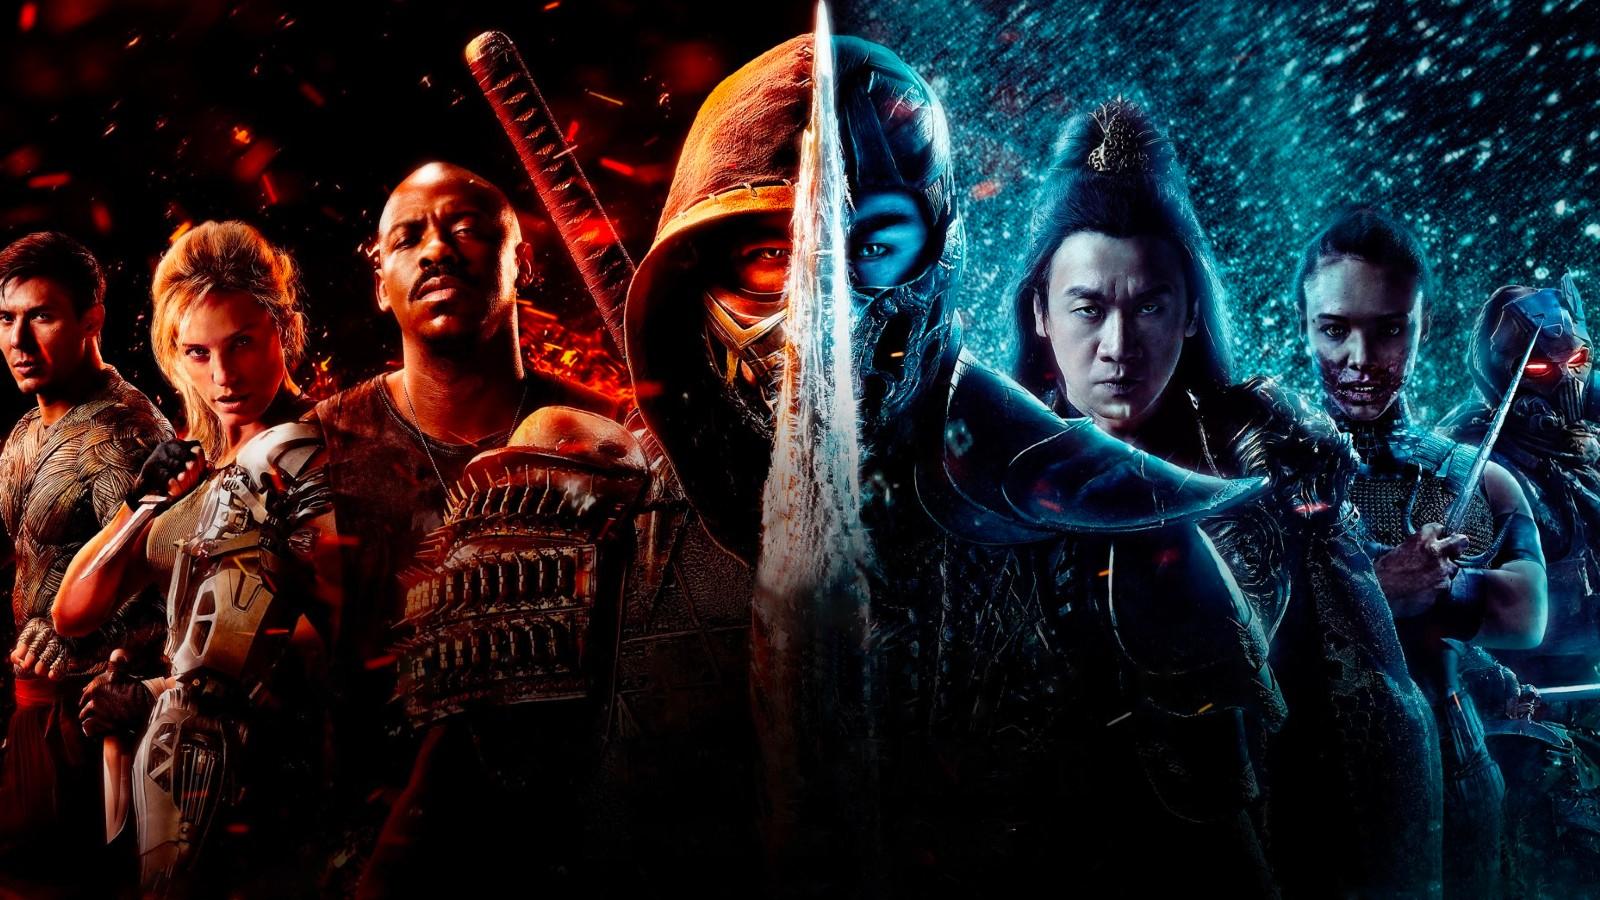 Mortal Kombat movie delayed one week - Polygon